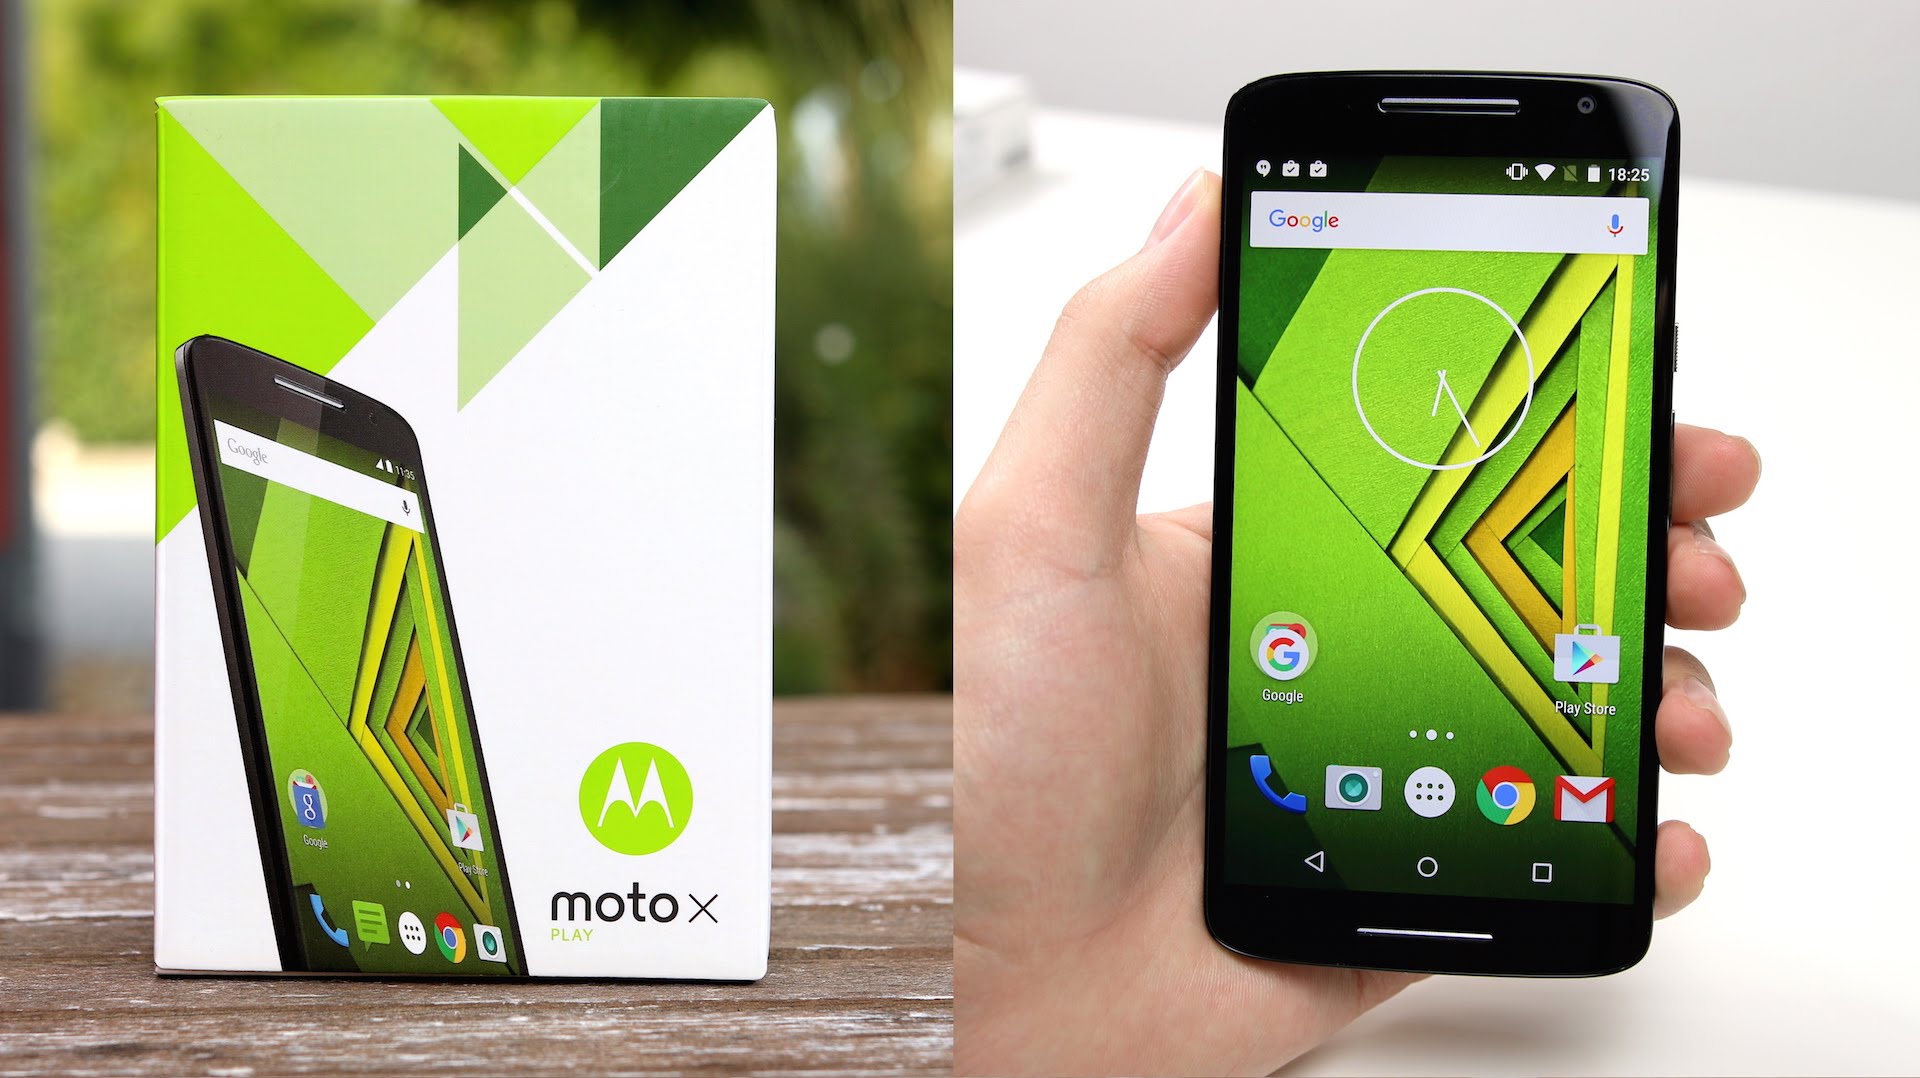 1x play. Motorola x Play. Запчасти Moto x Play. Moto x 3 m. Moto x VR.